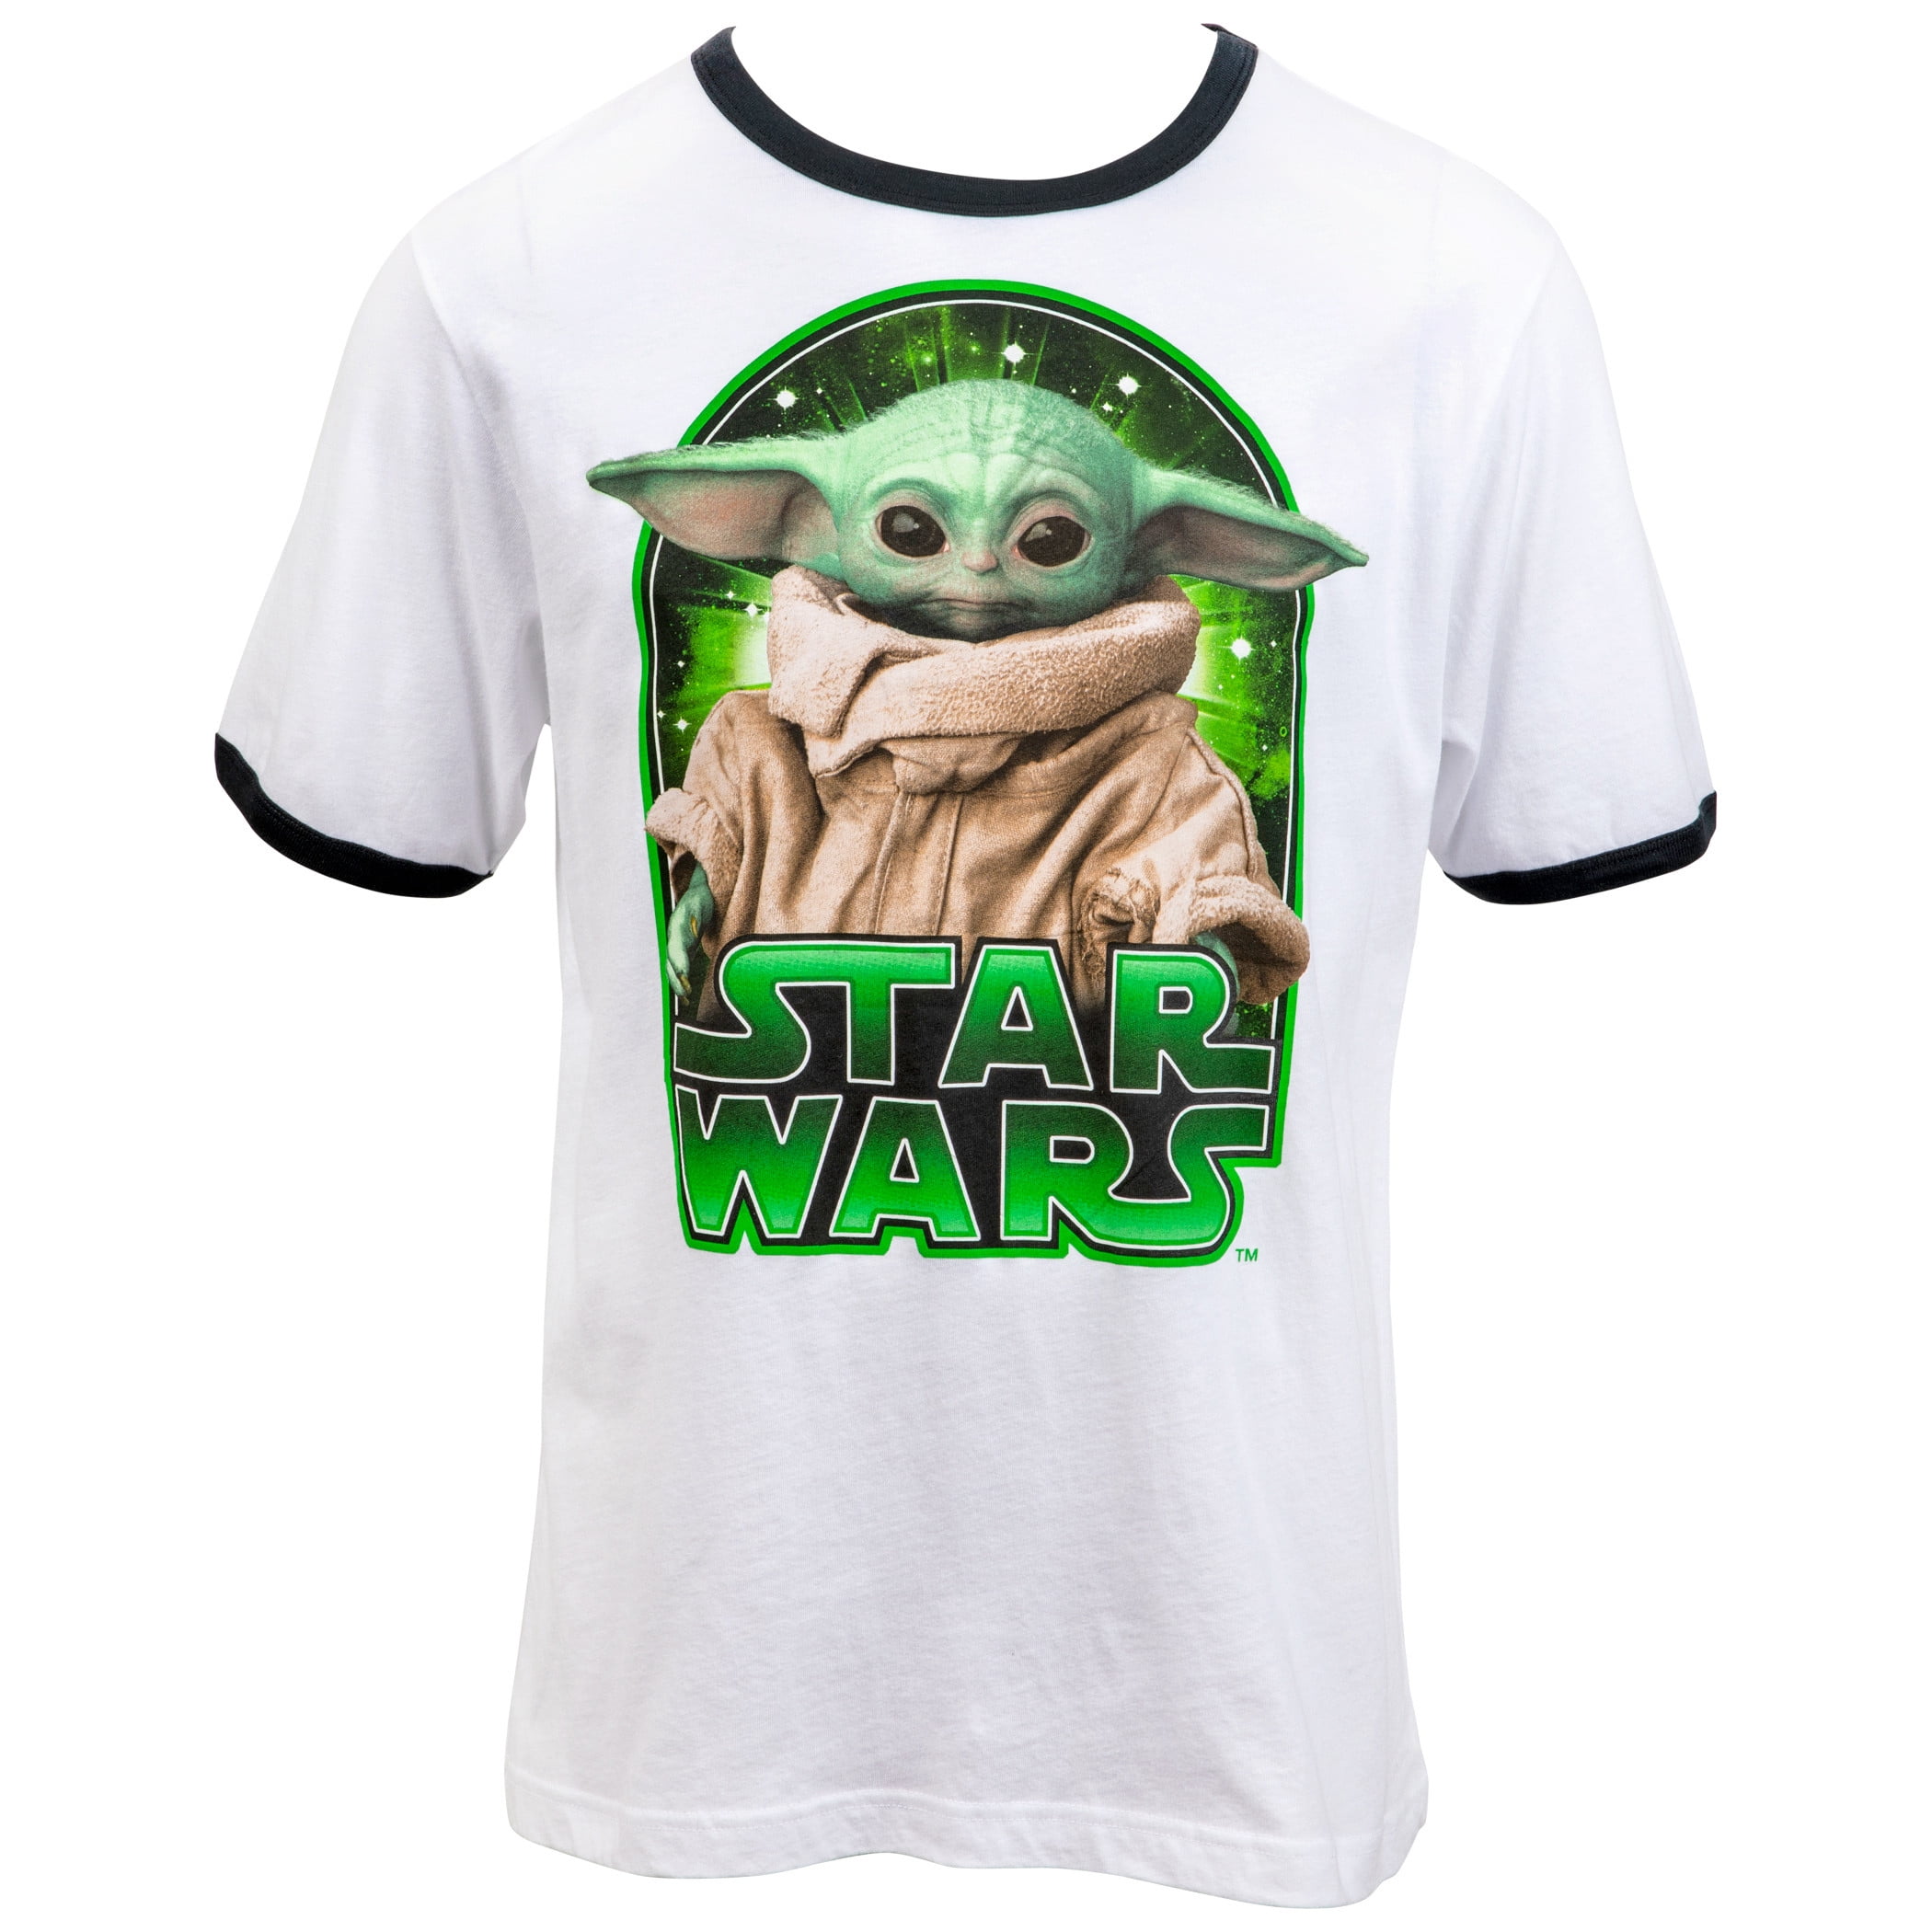 Star Wars The Mandalorian The Child Character Kids T-Shirt-Large (10-12)